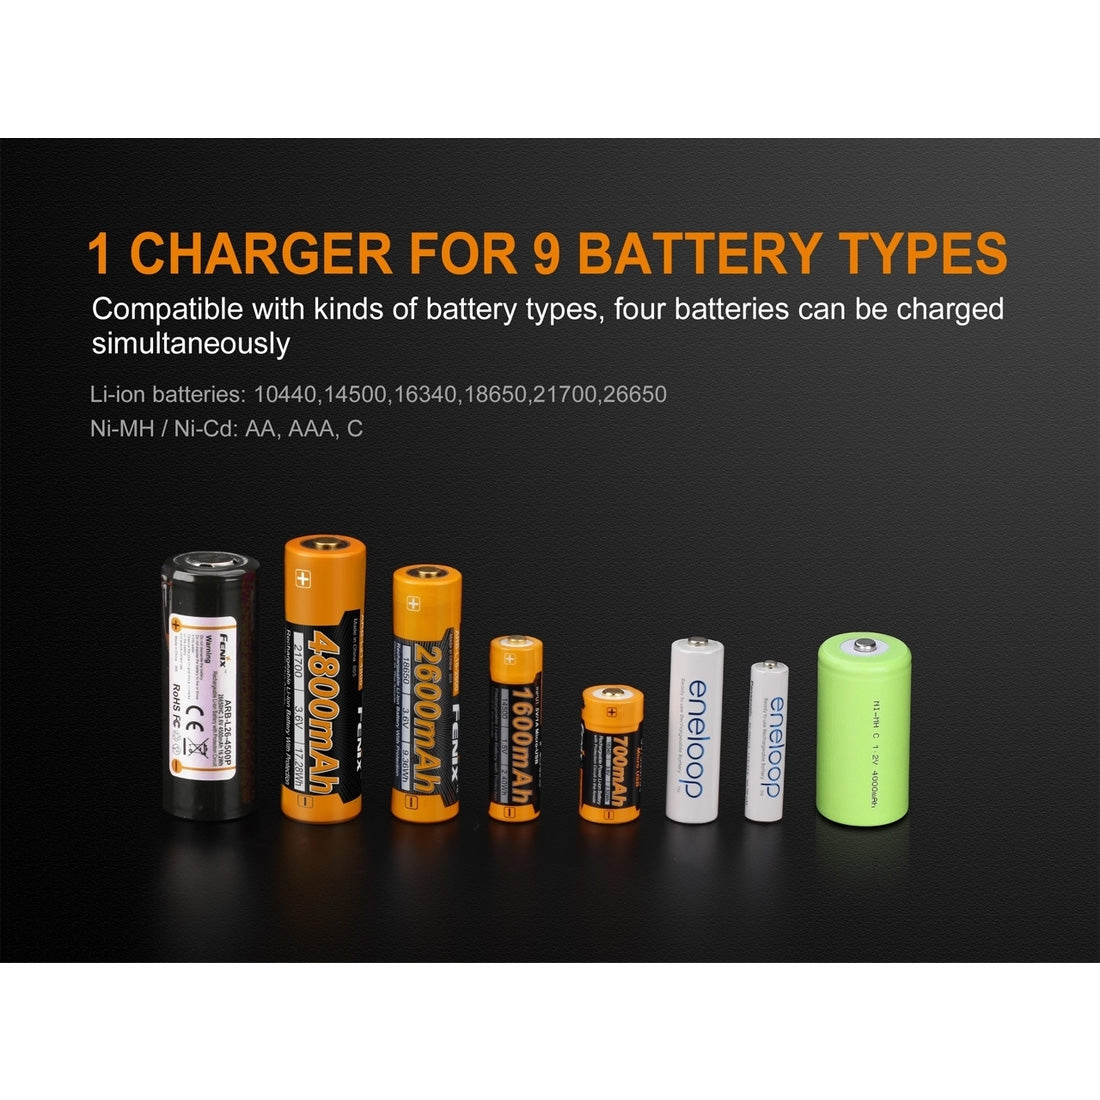 Fenix 4-Bay Digital Multifunctional Smart Battery Charger